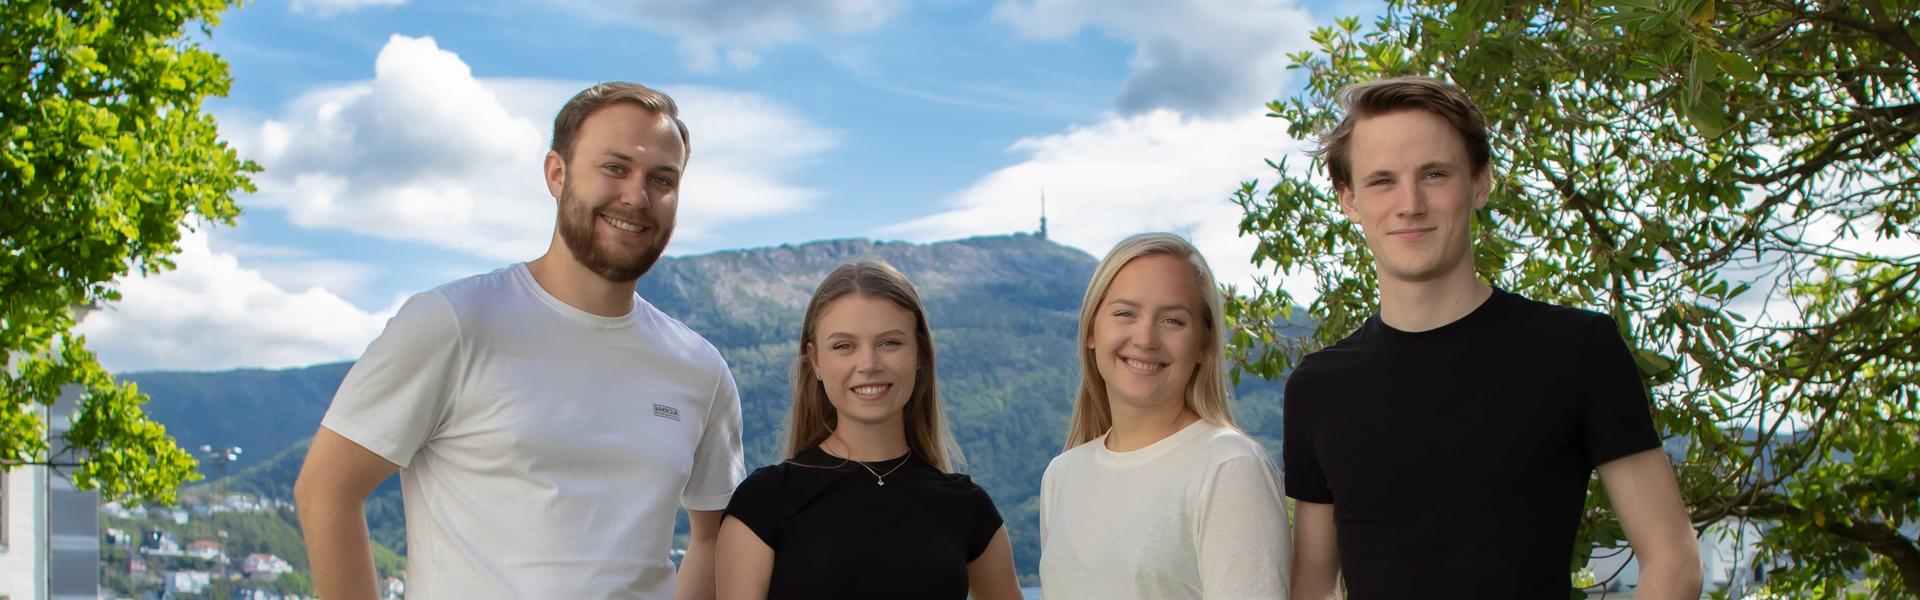 Naturviterne student har sosiale og faglige nettverk ved mange universitet i Norge